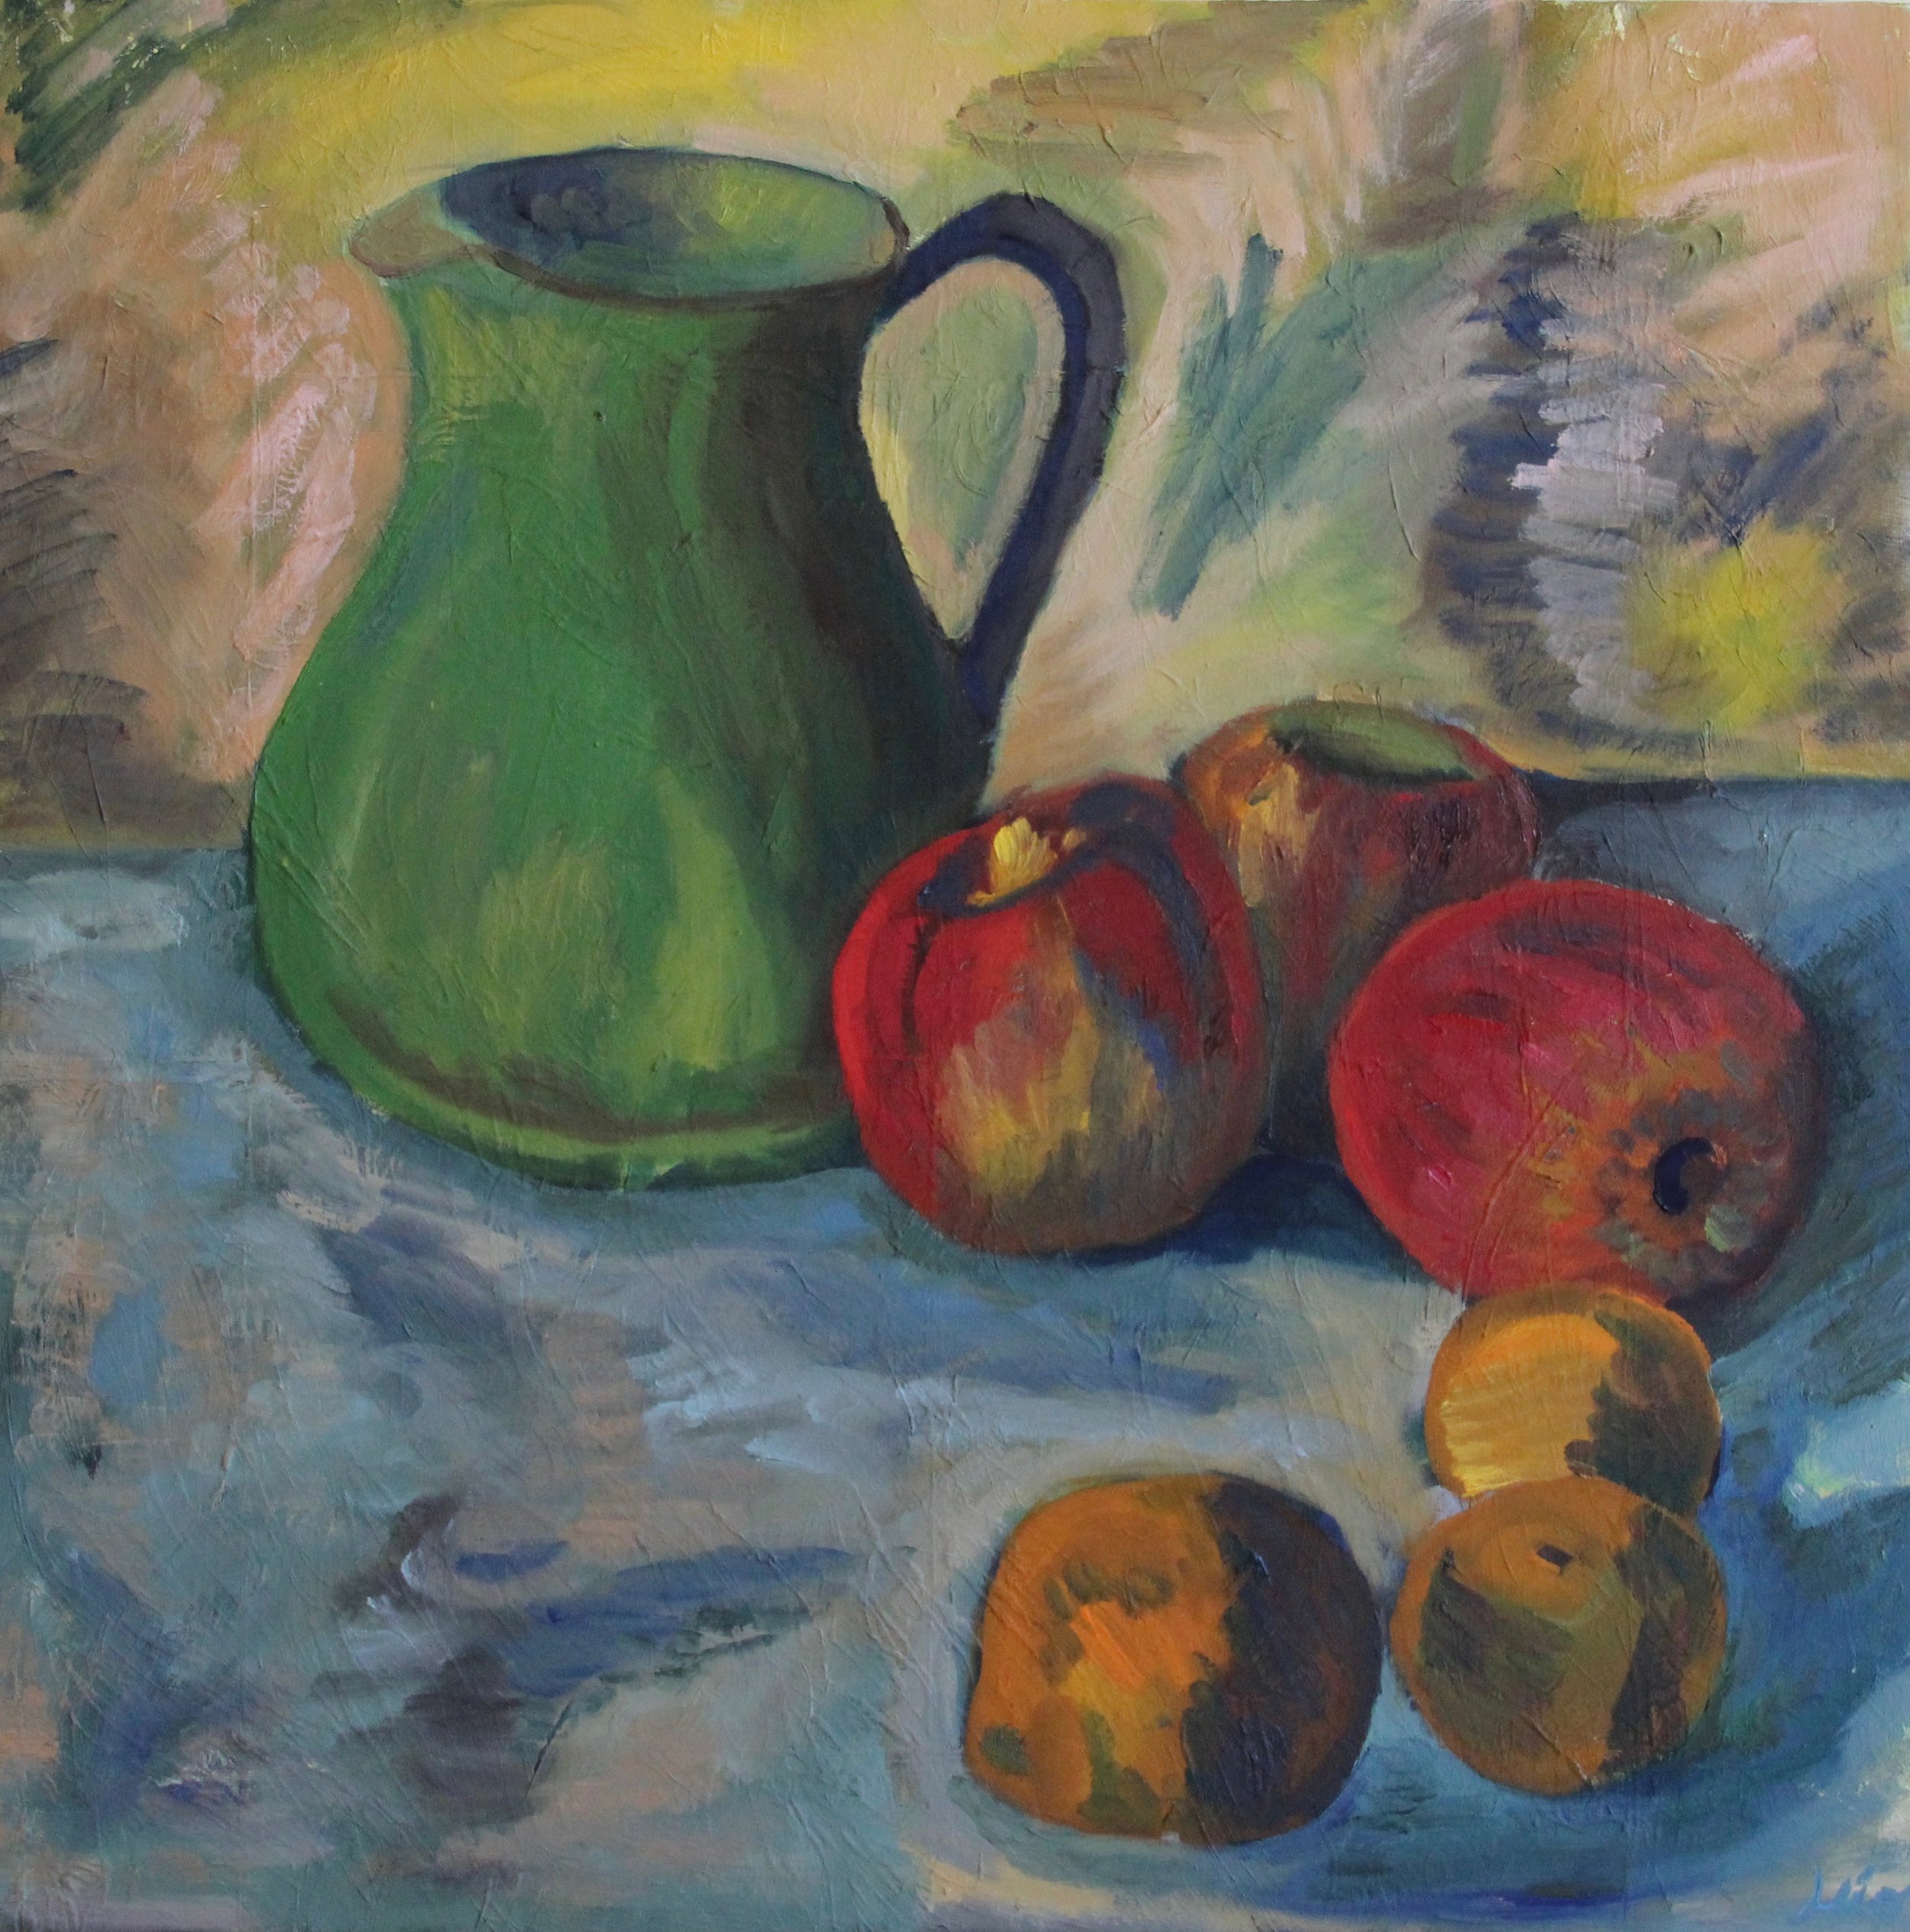 Organic apples and oranges, 2015